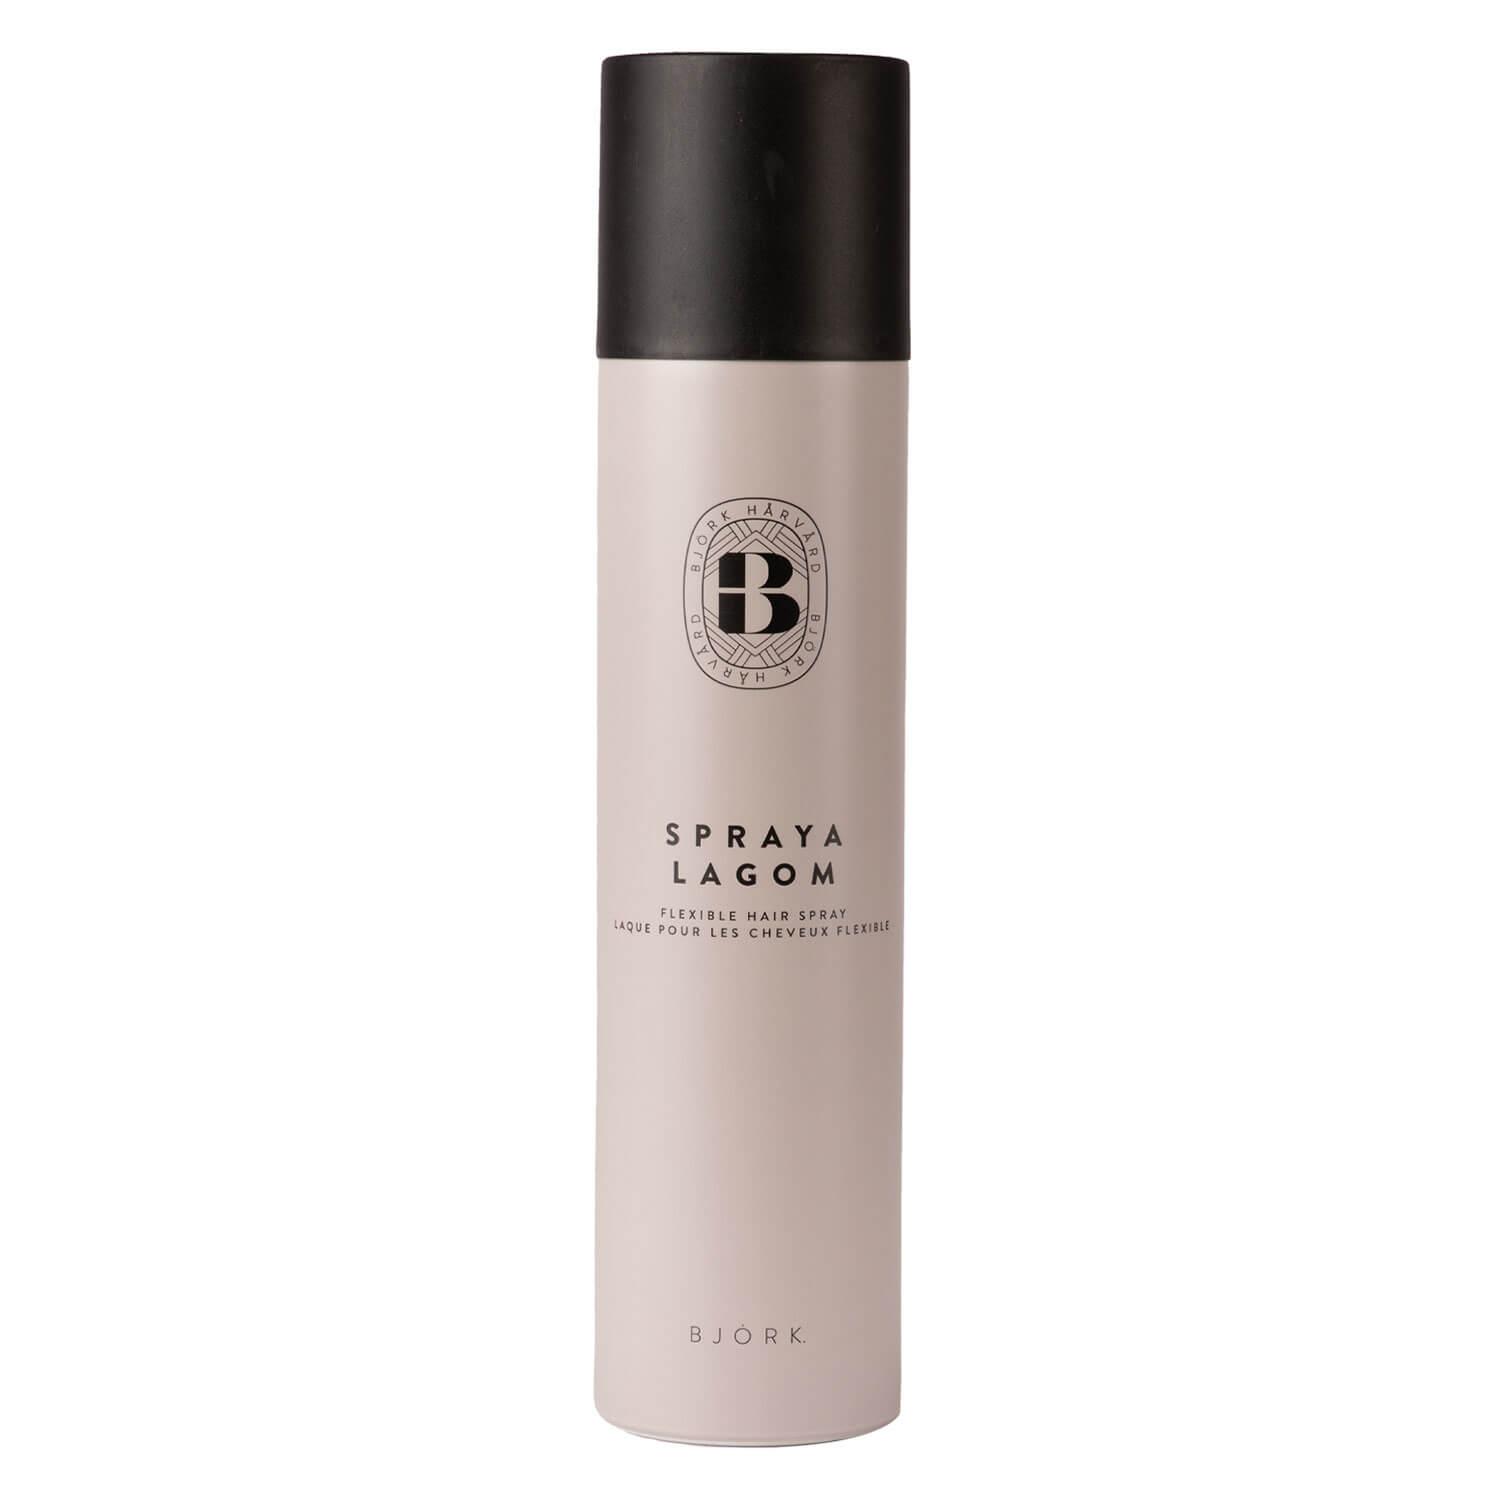 BJÖRK - Spraya Lagom Flexible Hair Spray